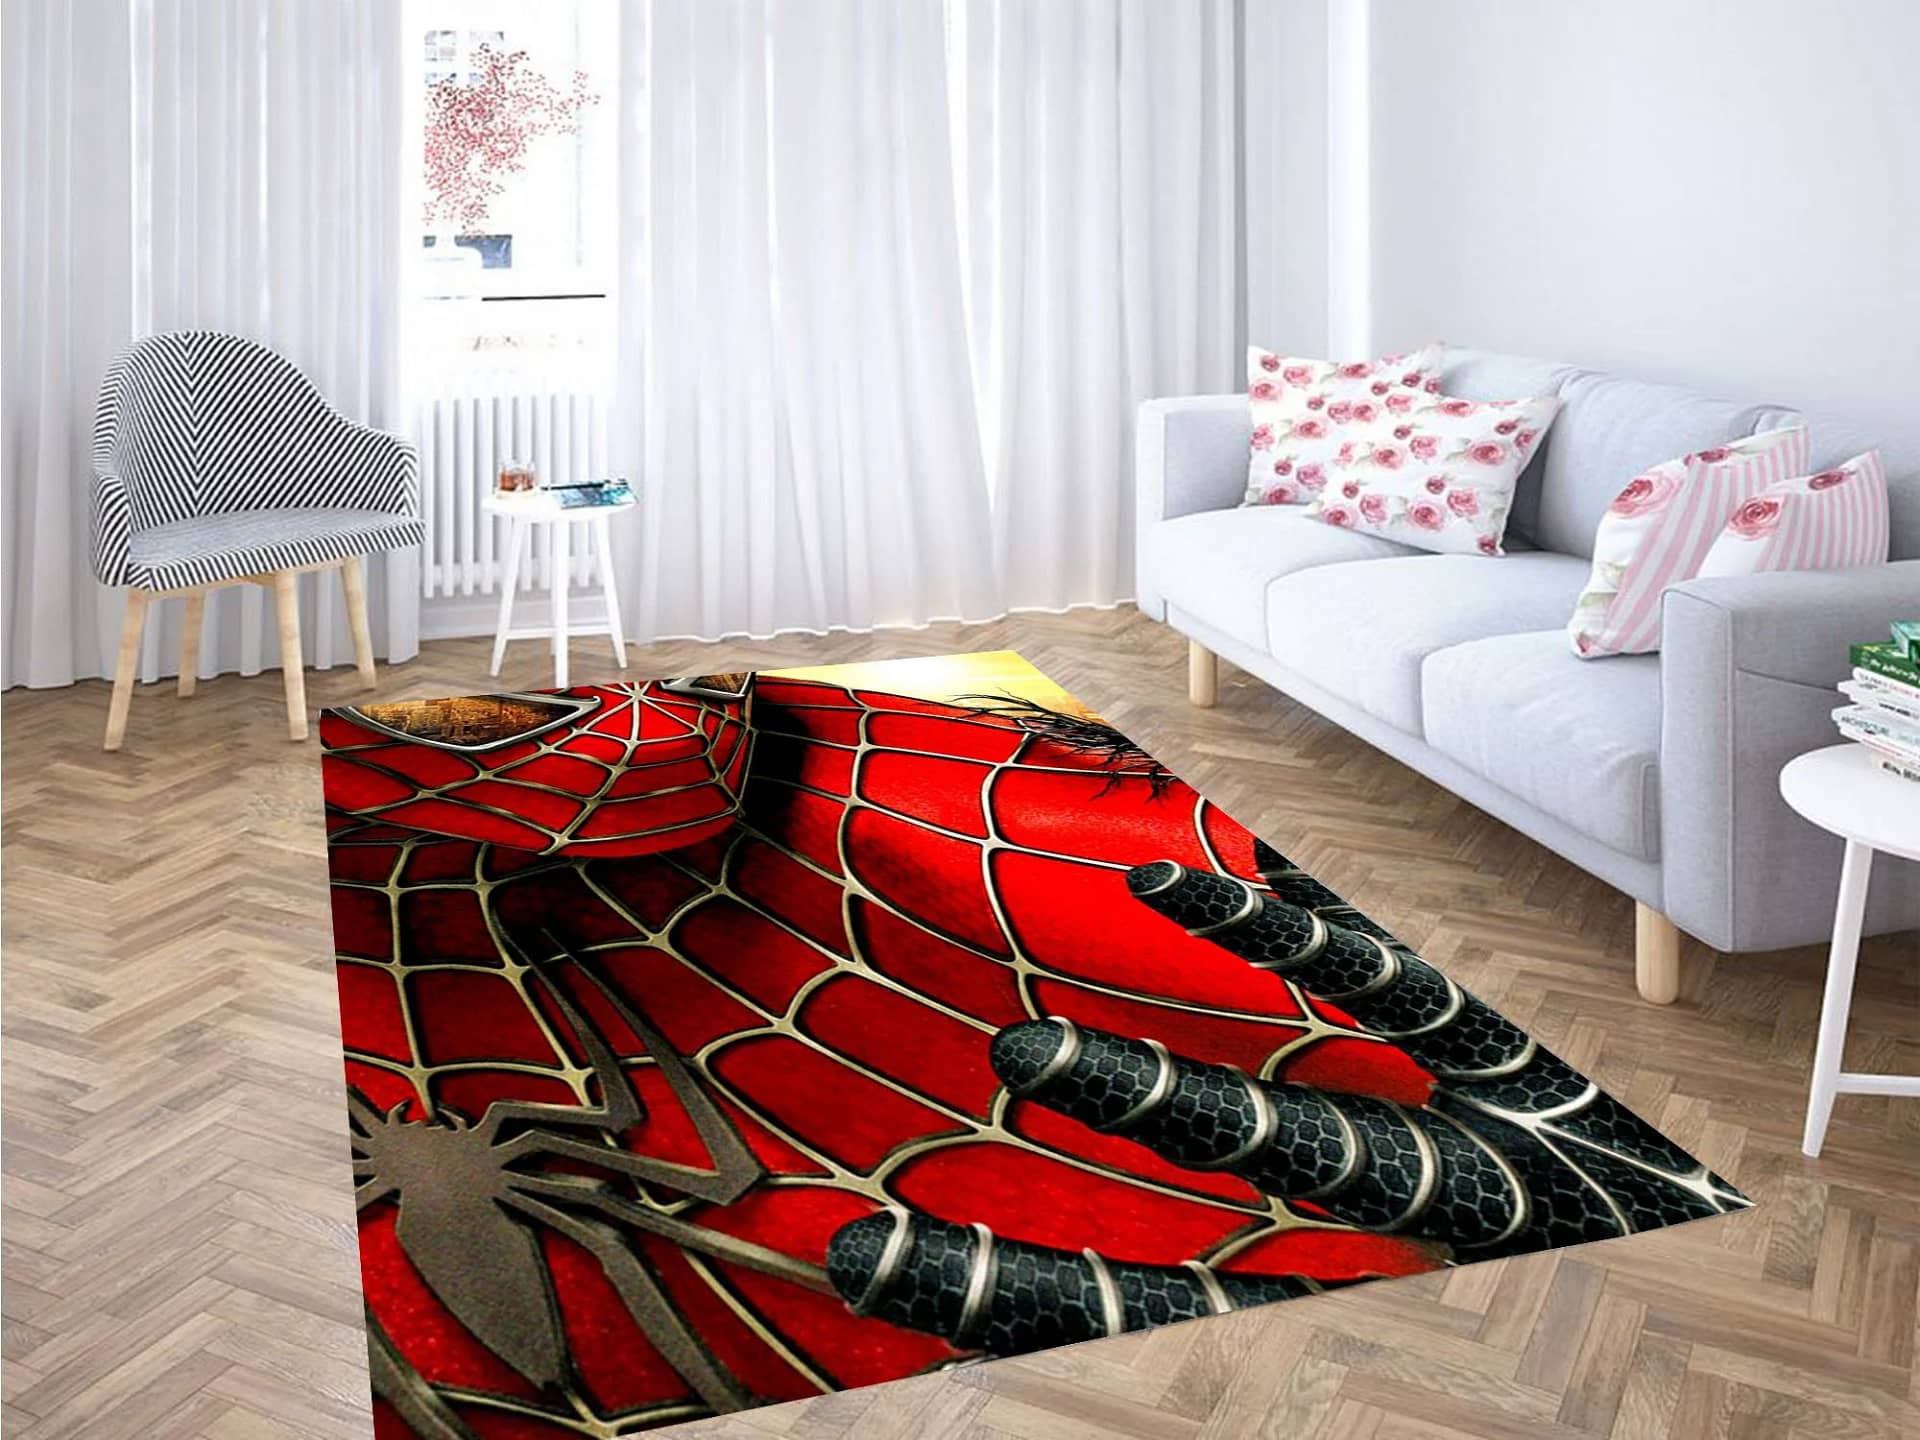 Old Marvel Comic Style Carpet Rug